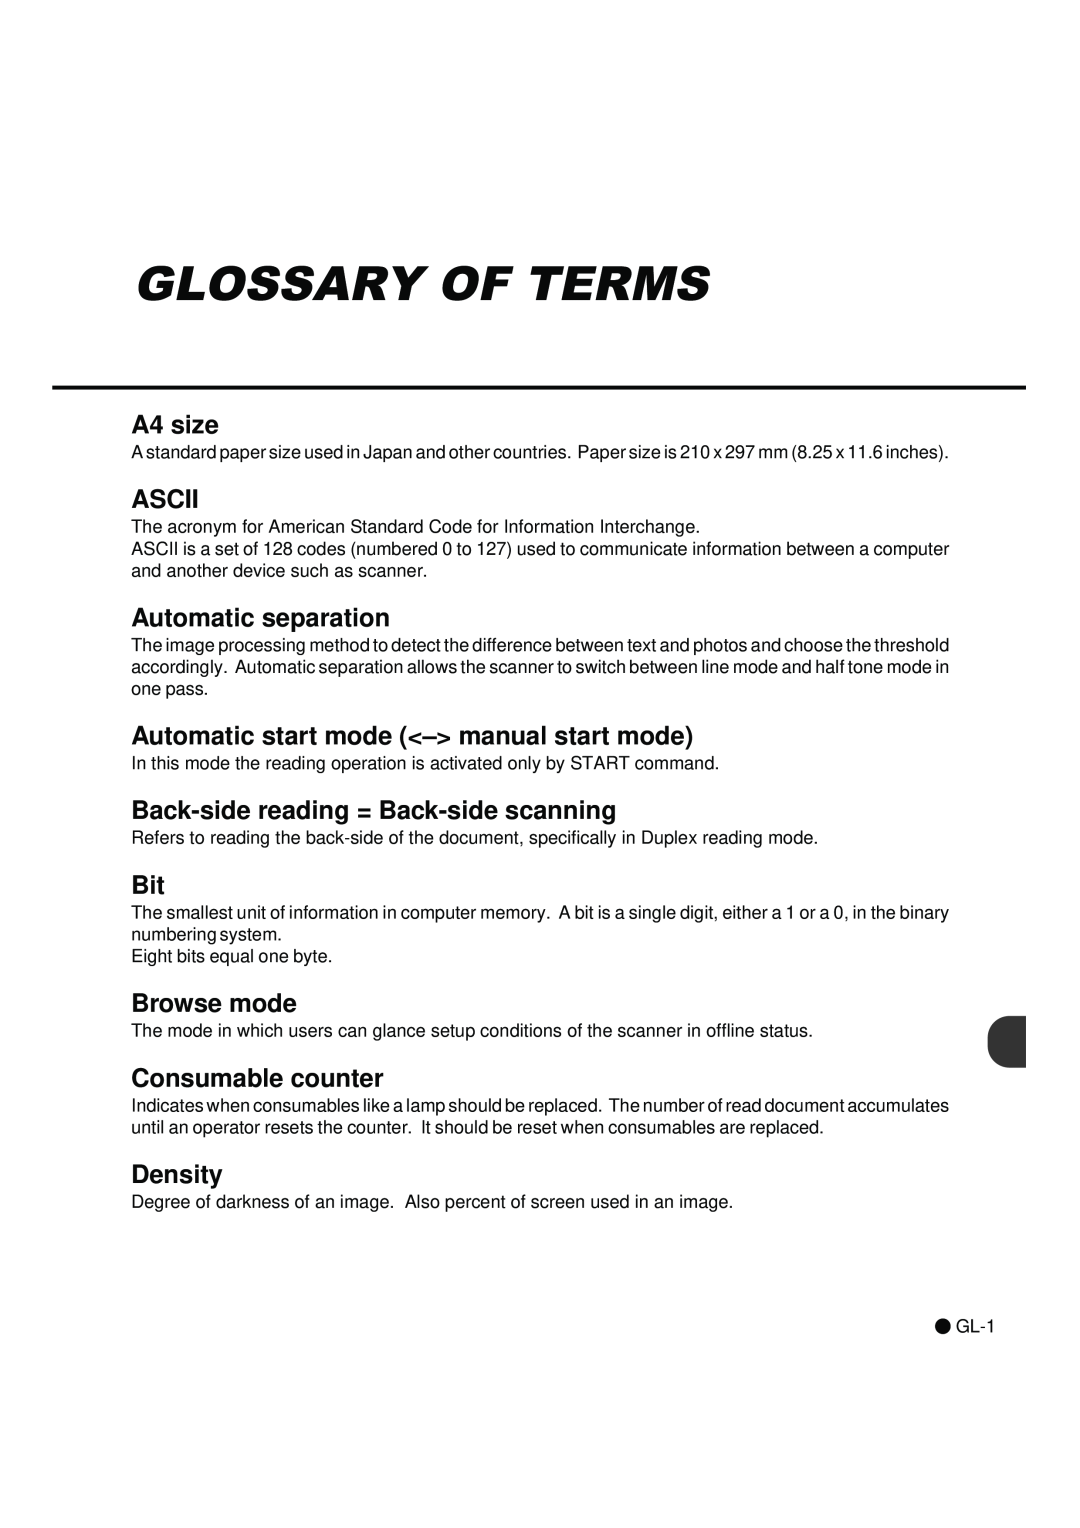 Fujitsu fi-4990C Glossary Of Terms, A4 size, Ascii, Automatic separation, Automatic start mode - manual start mode 